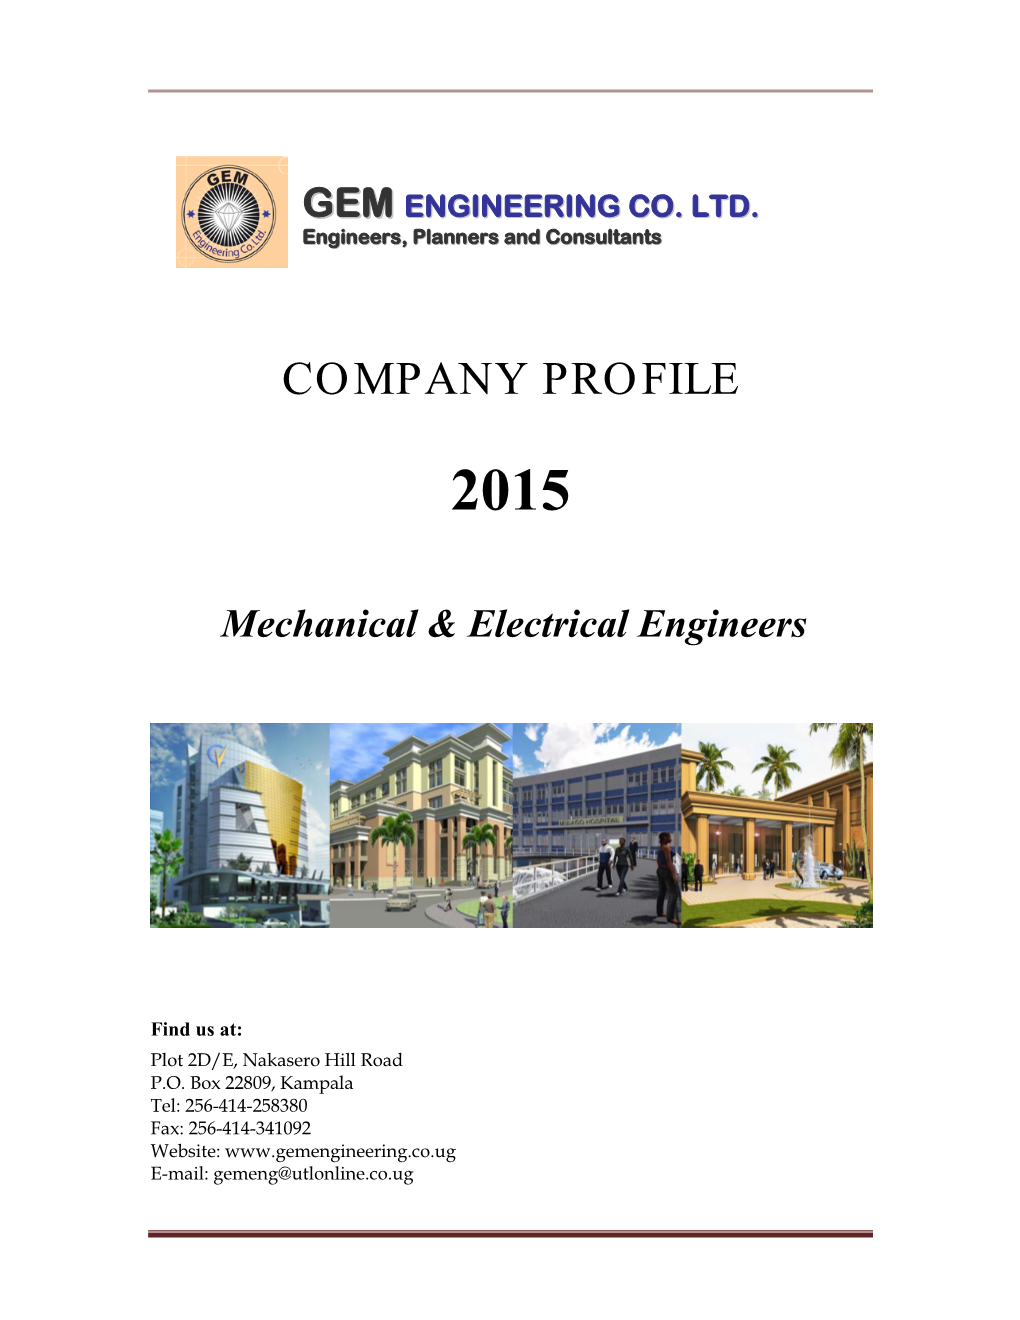 Gem Engineering Company Profile